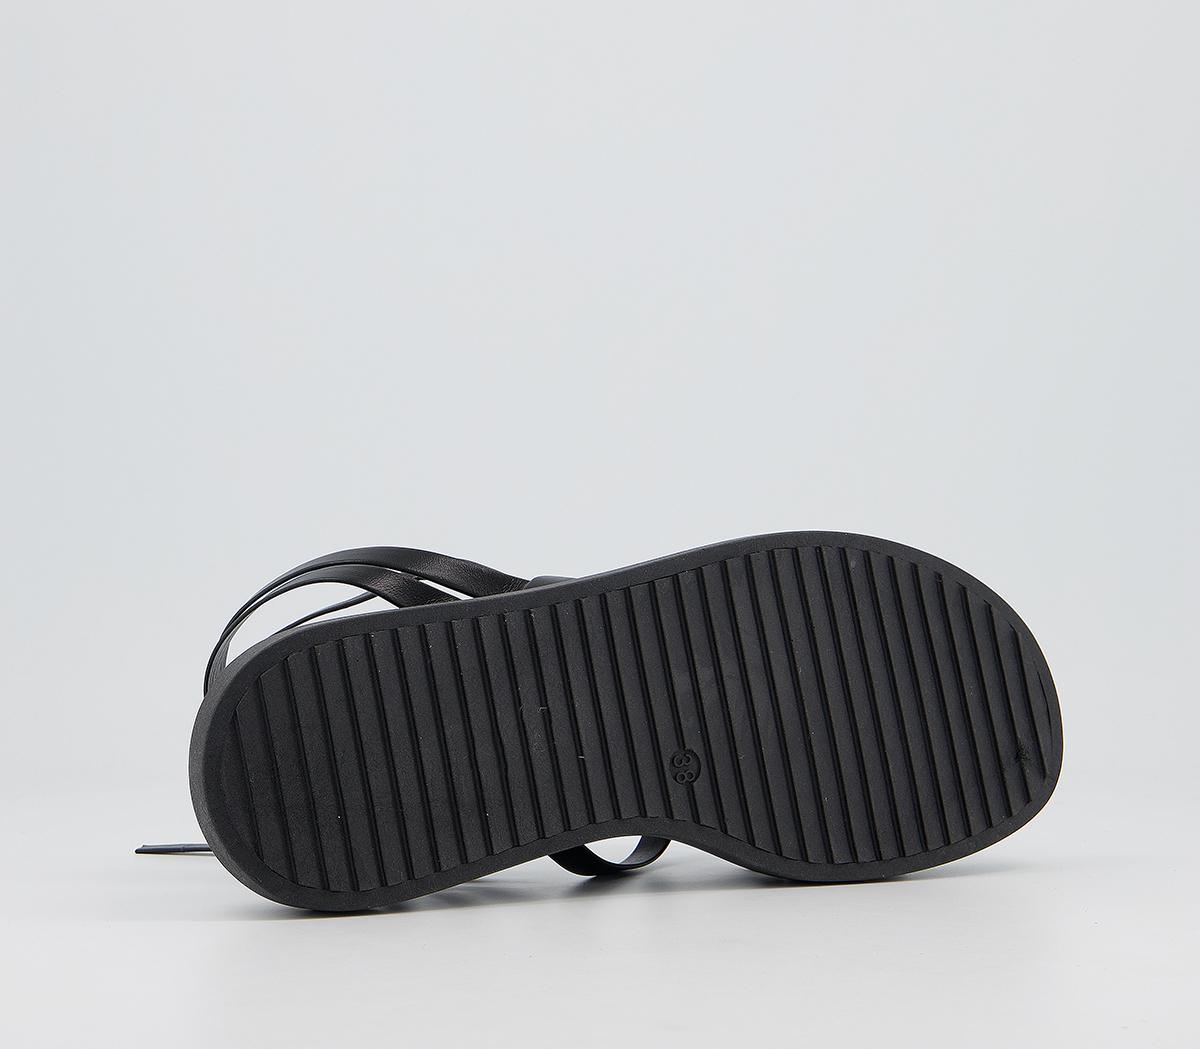 Office Slim Strappy Sandals Black - Womenâs Sandals